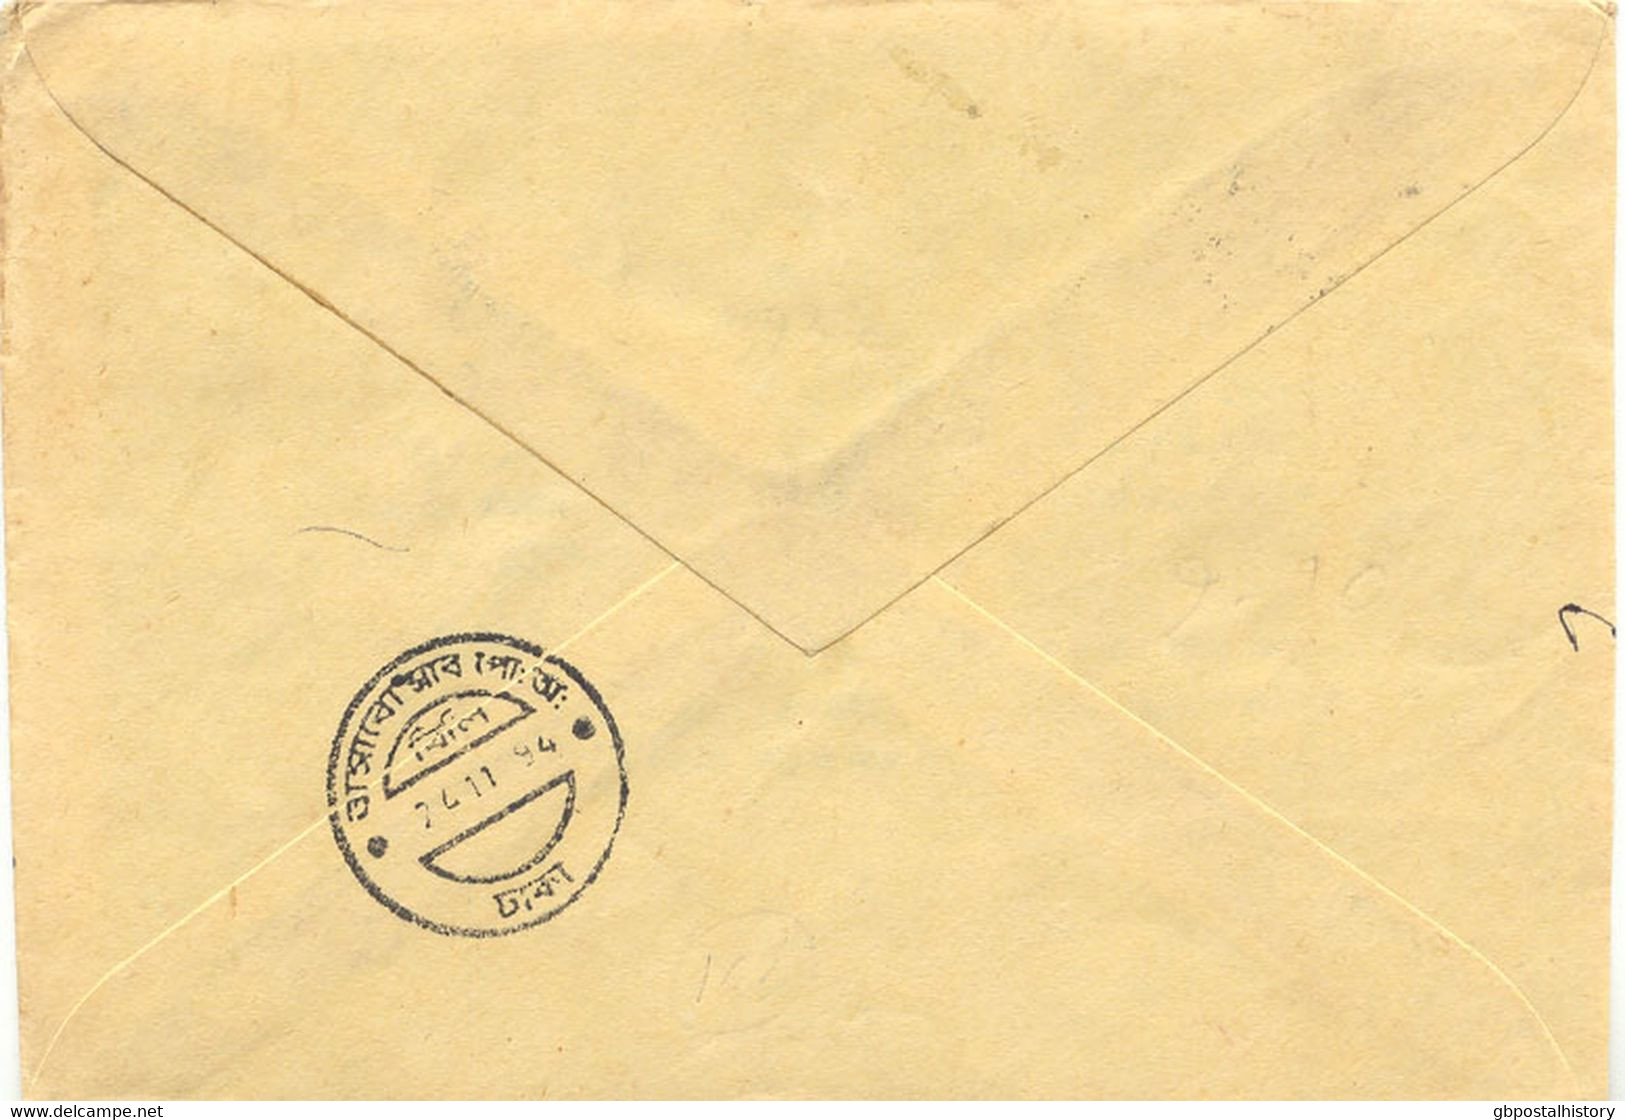 BANGLADESH 1994 Superb 50 P Bird Postal Stationery Envelope MAJOR VARIETY VFU - Bangladesh